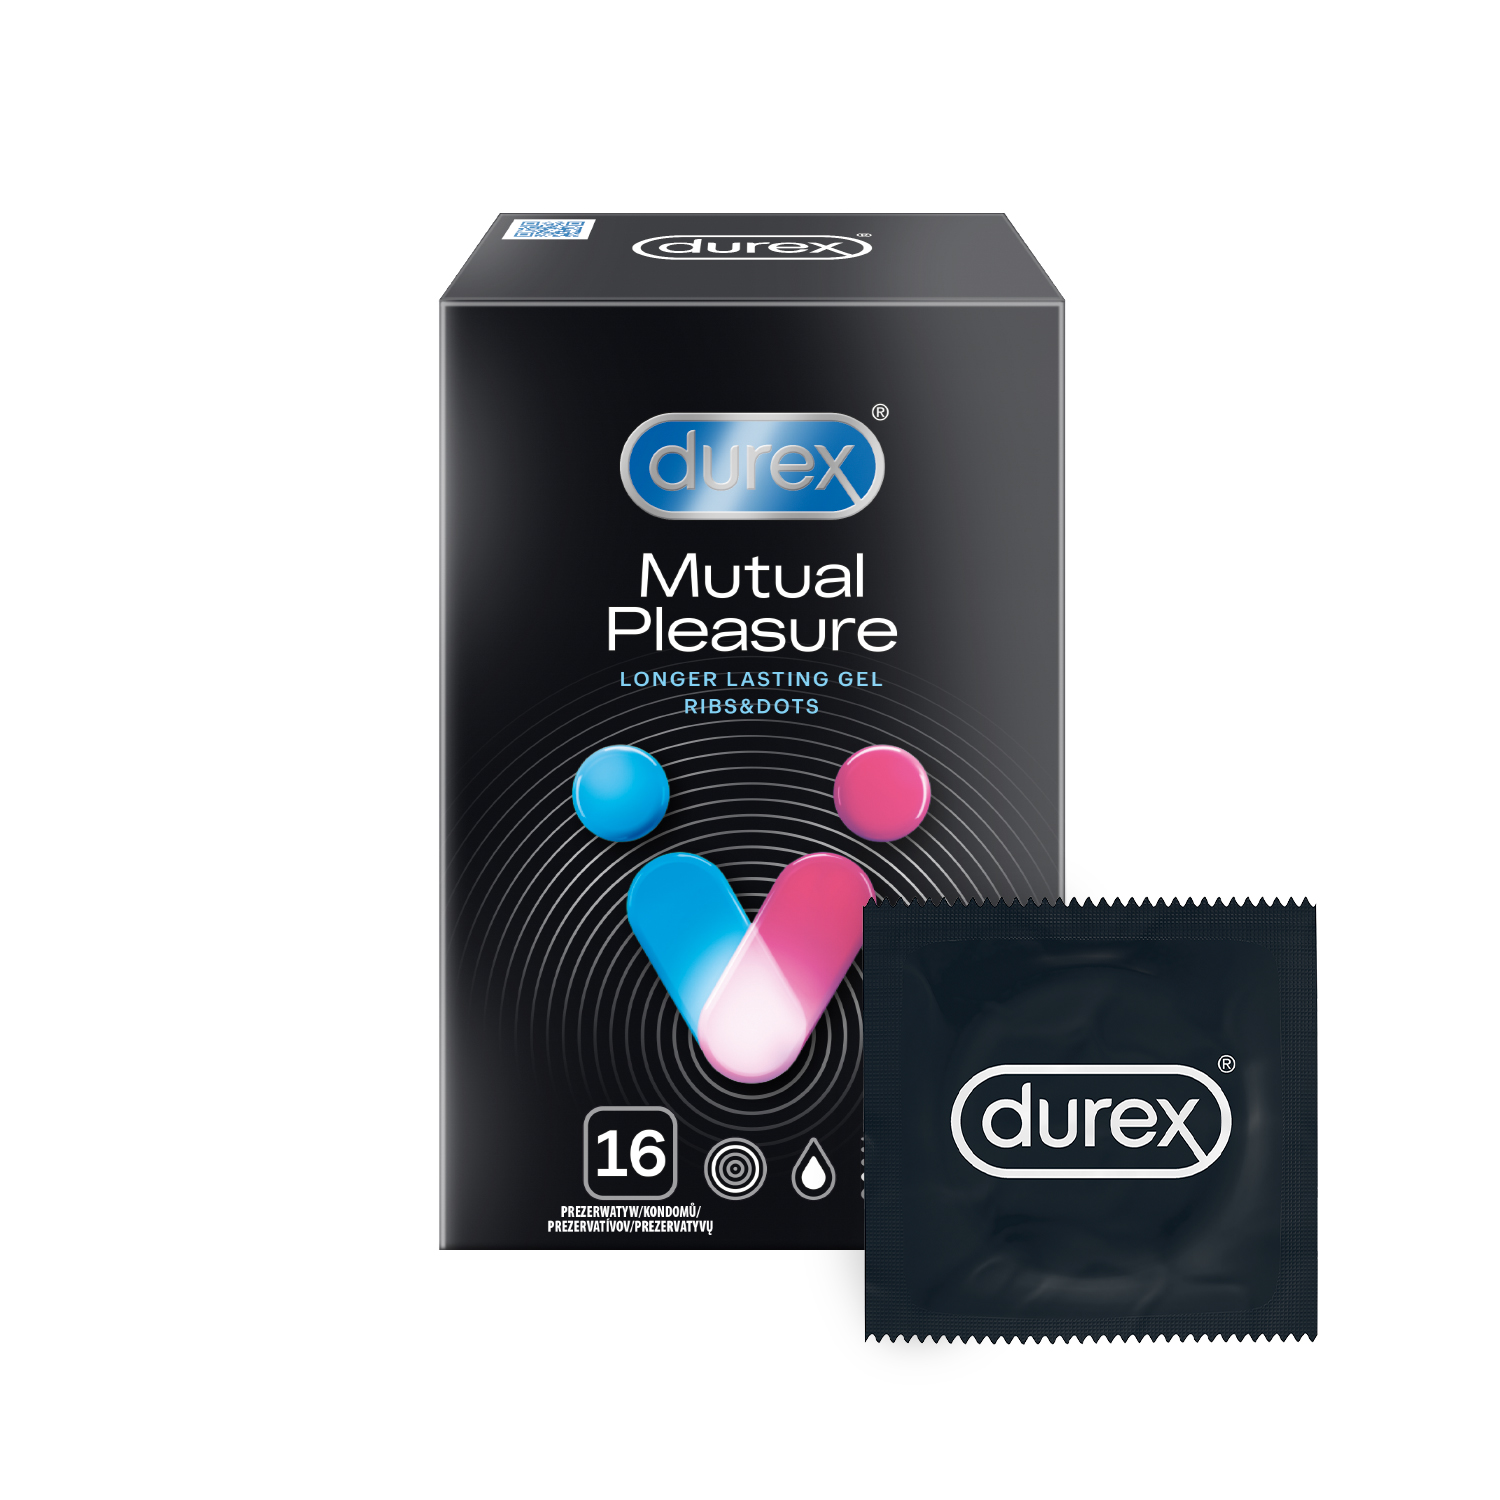 Durex Kondomy Mutual Pleasure 3 ks